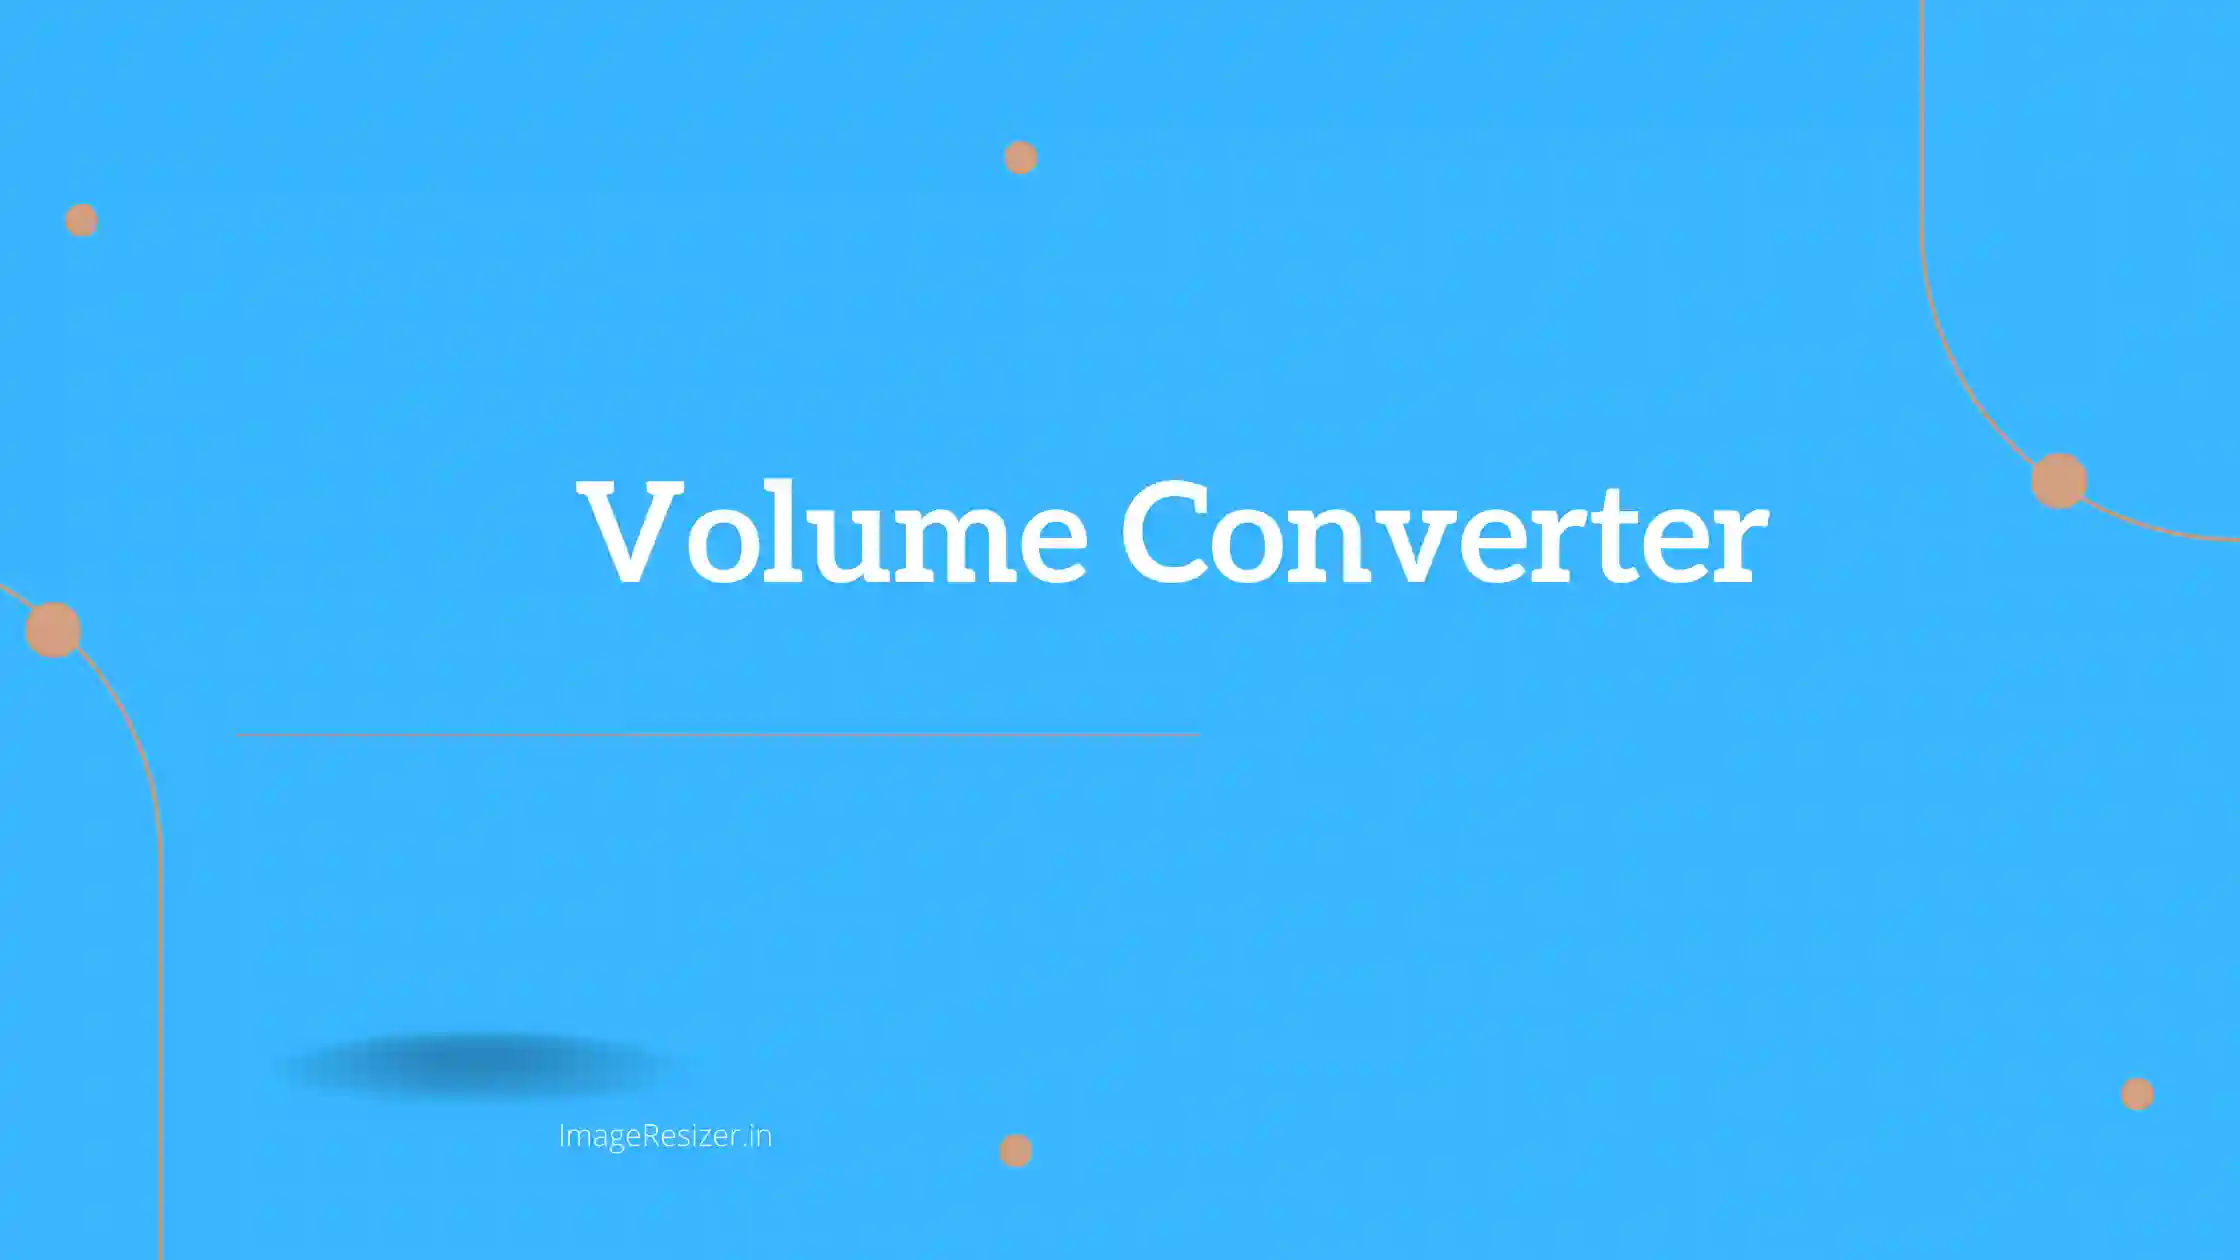 Volume converter